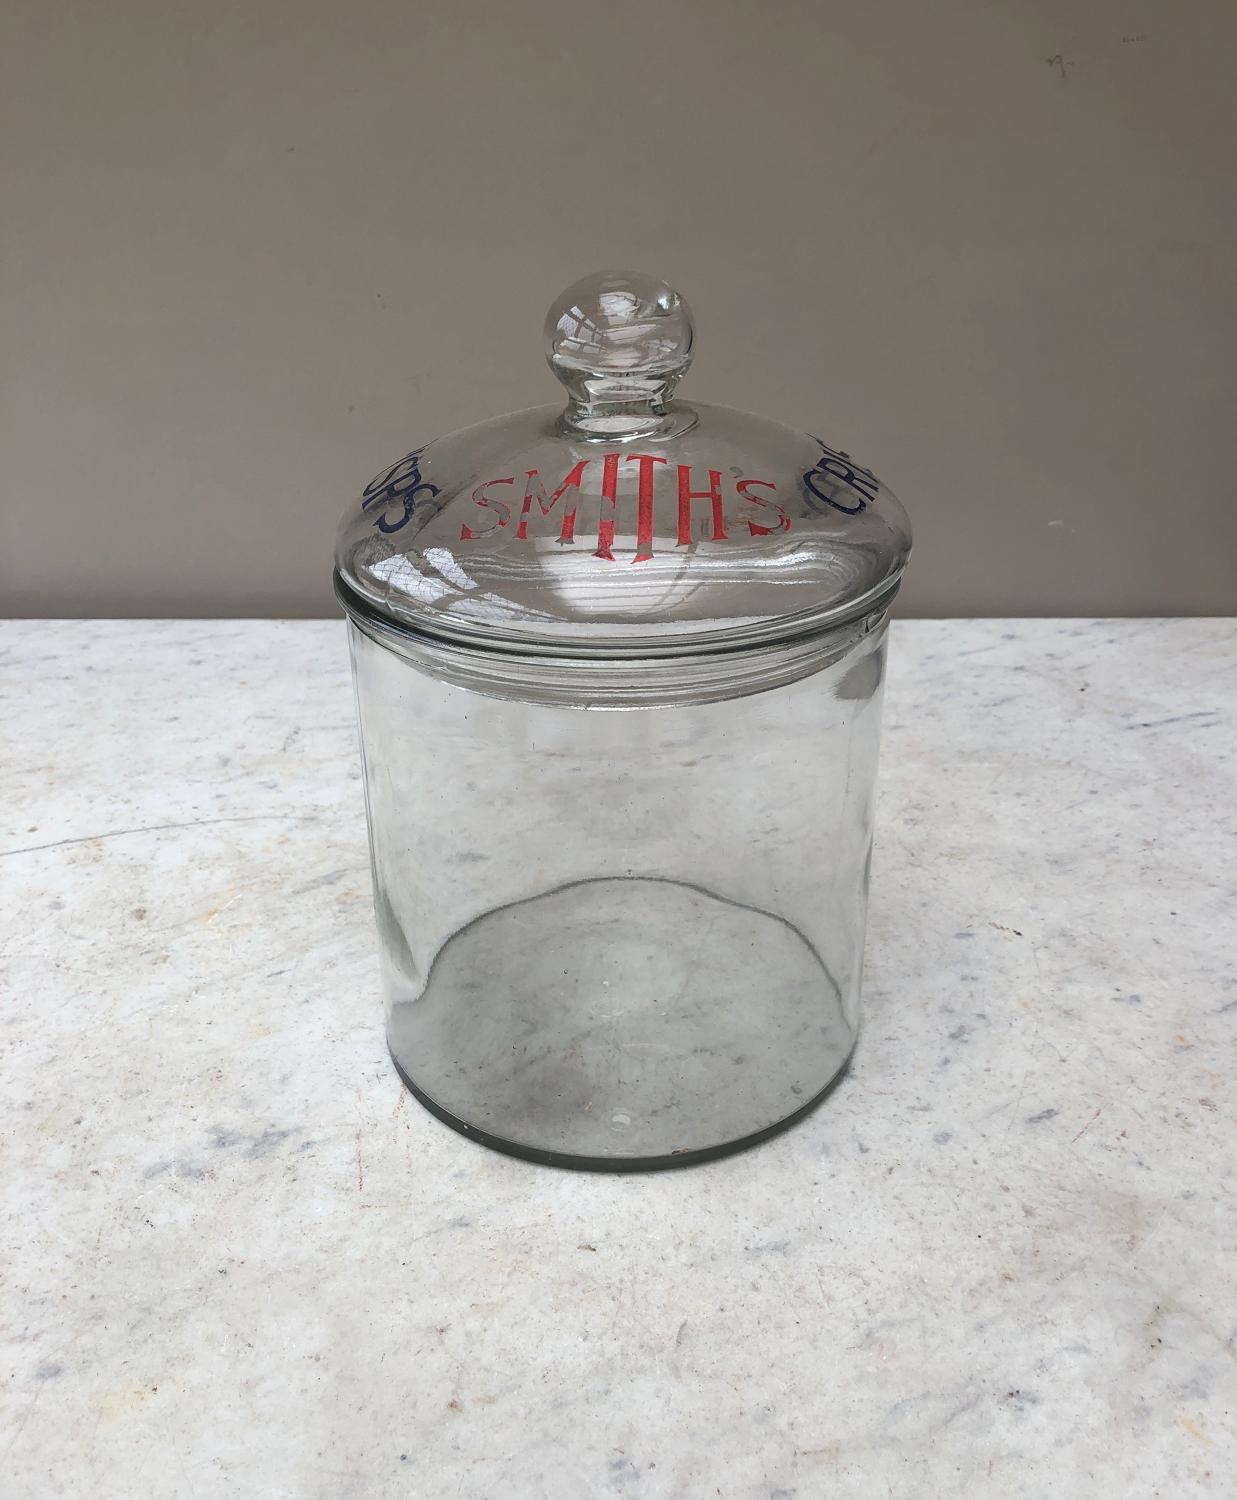 1930s Shops Glass Counter Top Advertising Jar - Smiths Crisps